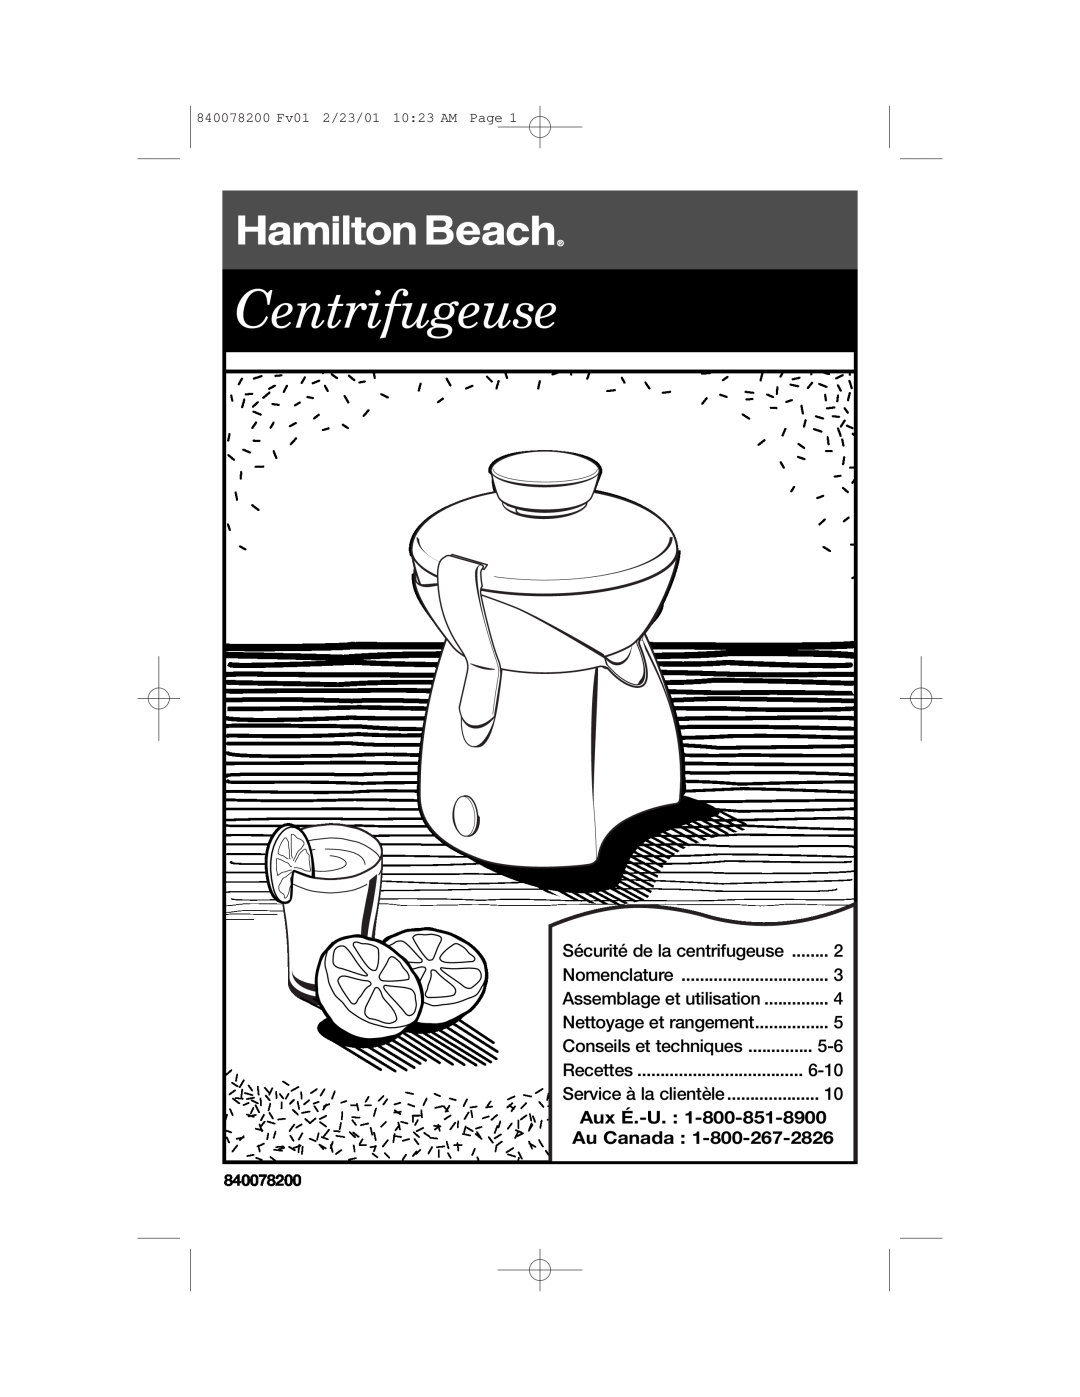 Hamilton Beach 67333 manual Centrifugeuse, 10 23 AM, Page, 840078200 Fv01, 2/23/01 